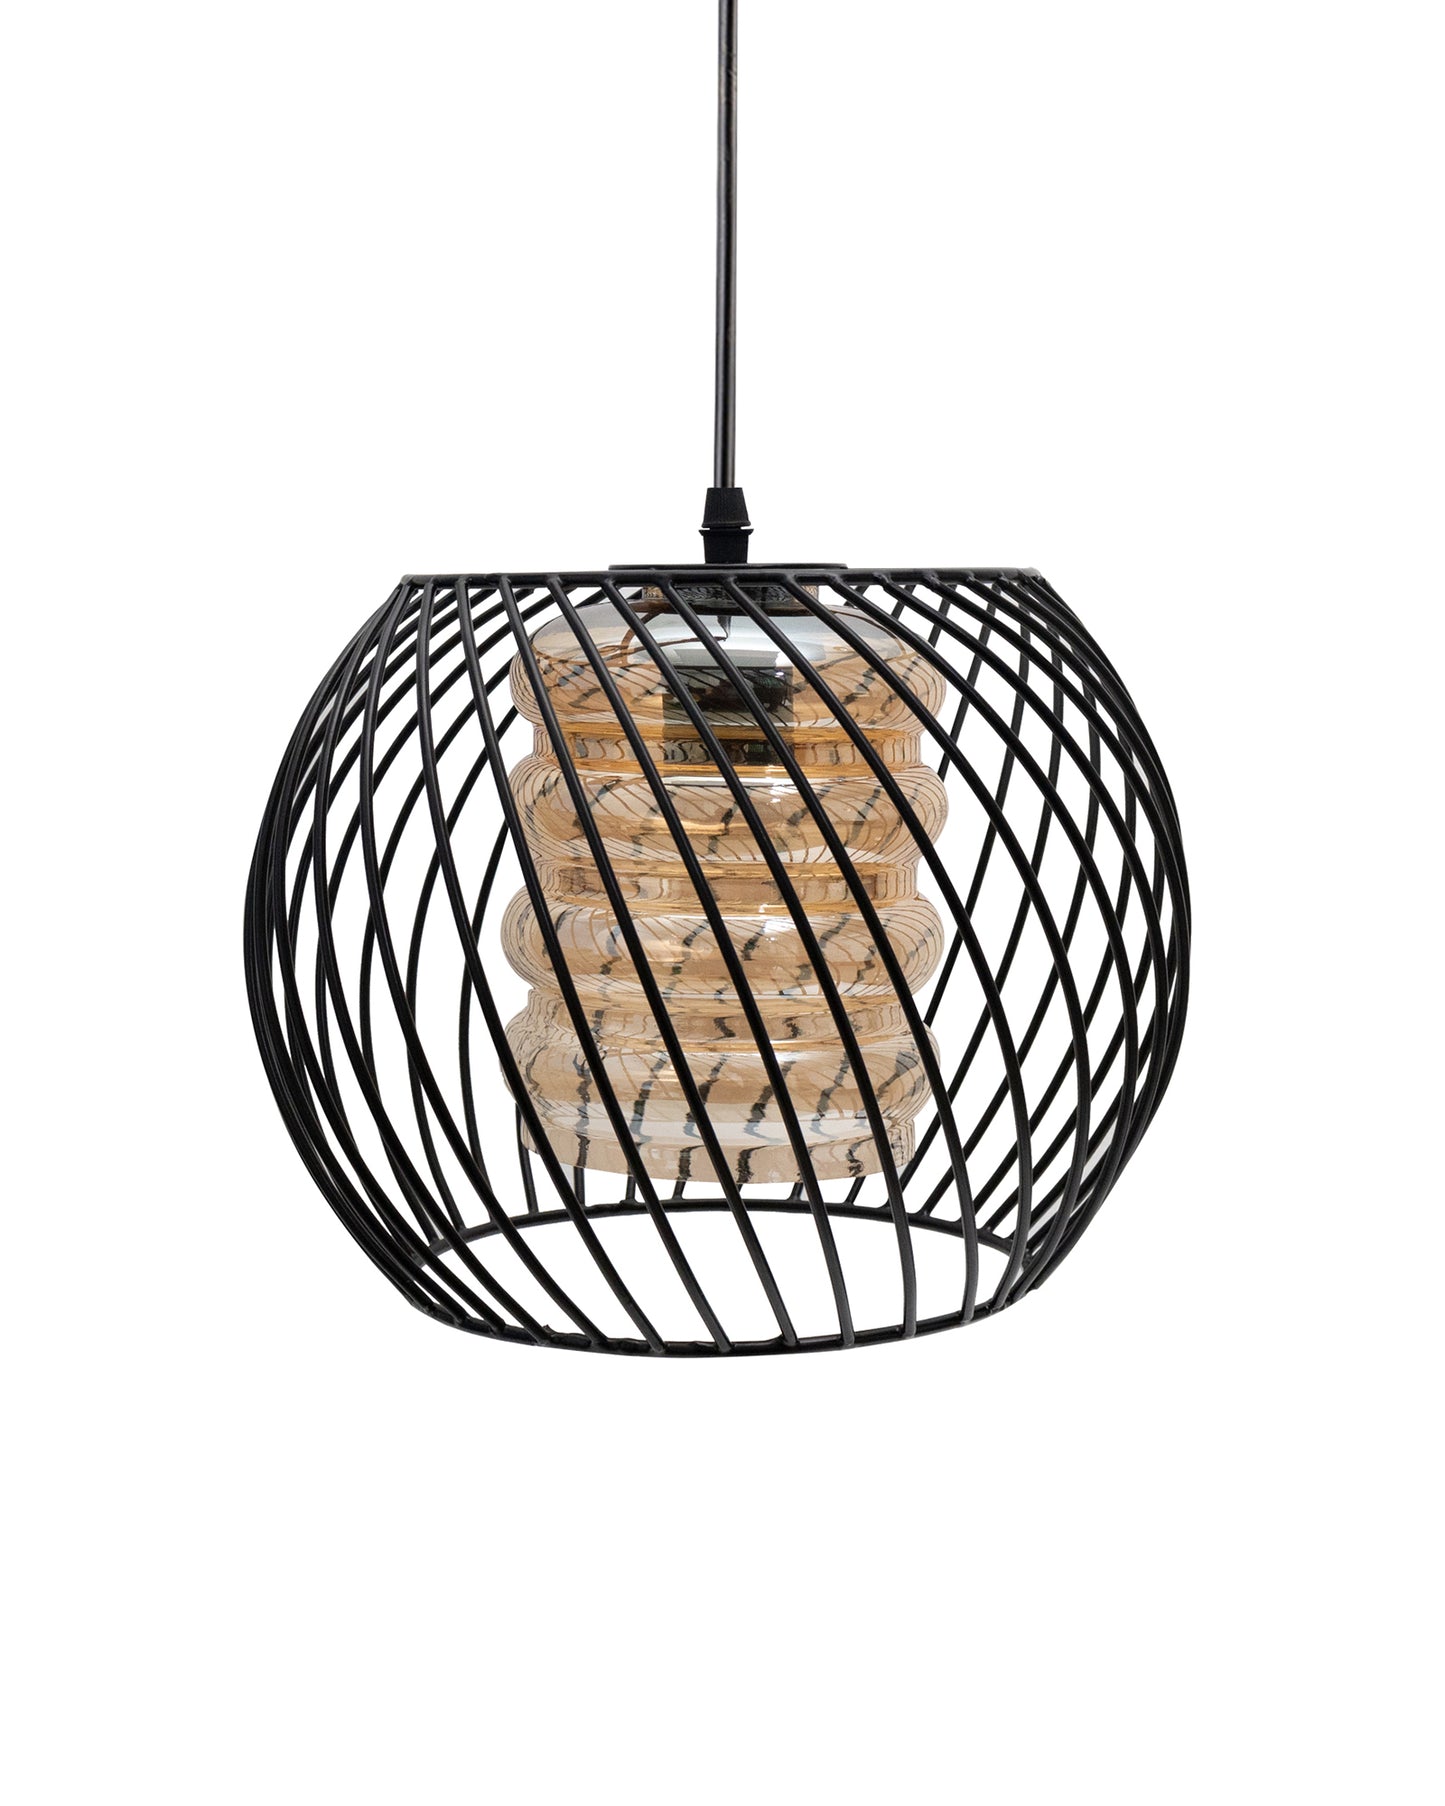 Black Twister Cage Pendant Lighting with Glass Shades,Porch Gazebo Barn Light Fixture